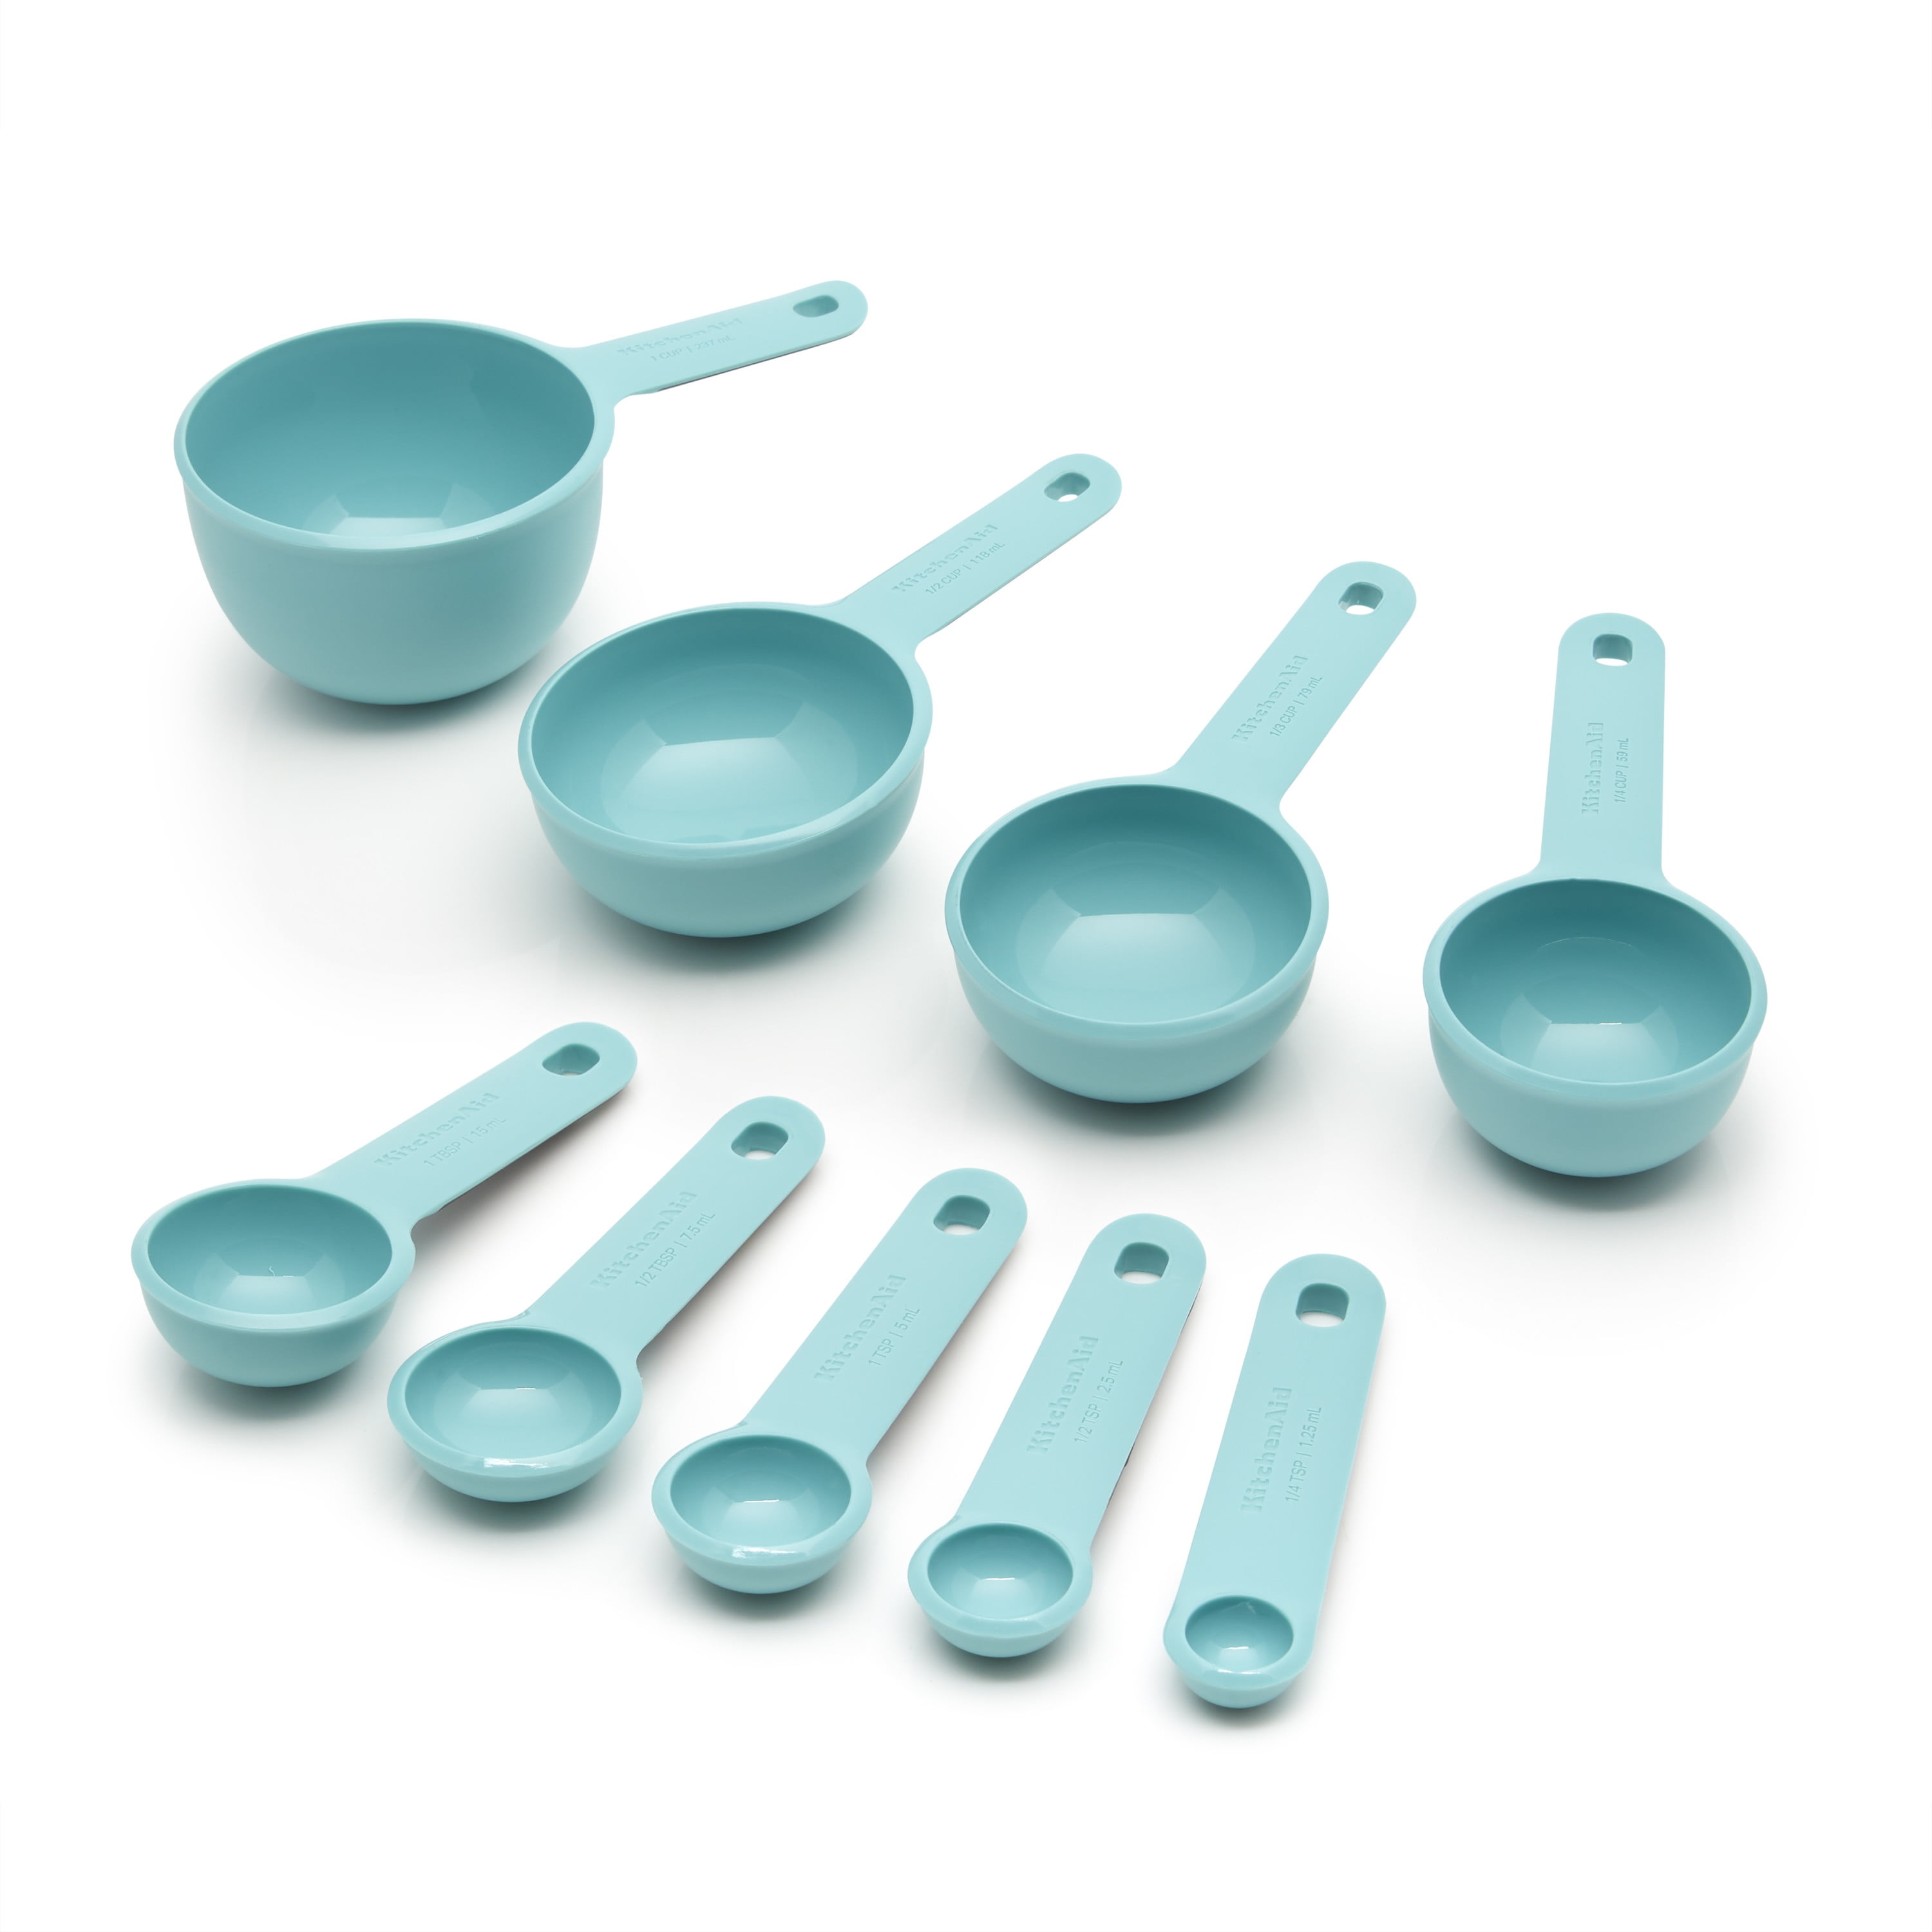 Kitchenaid Plastic Measuring Spoons Ocean Blue Set of 5 